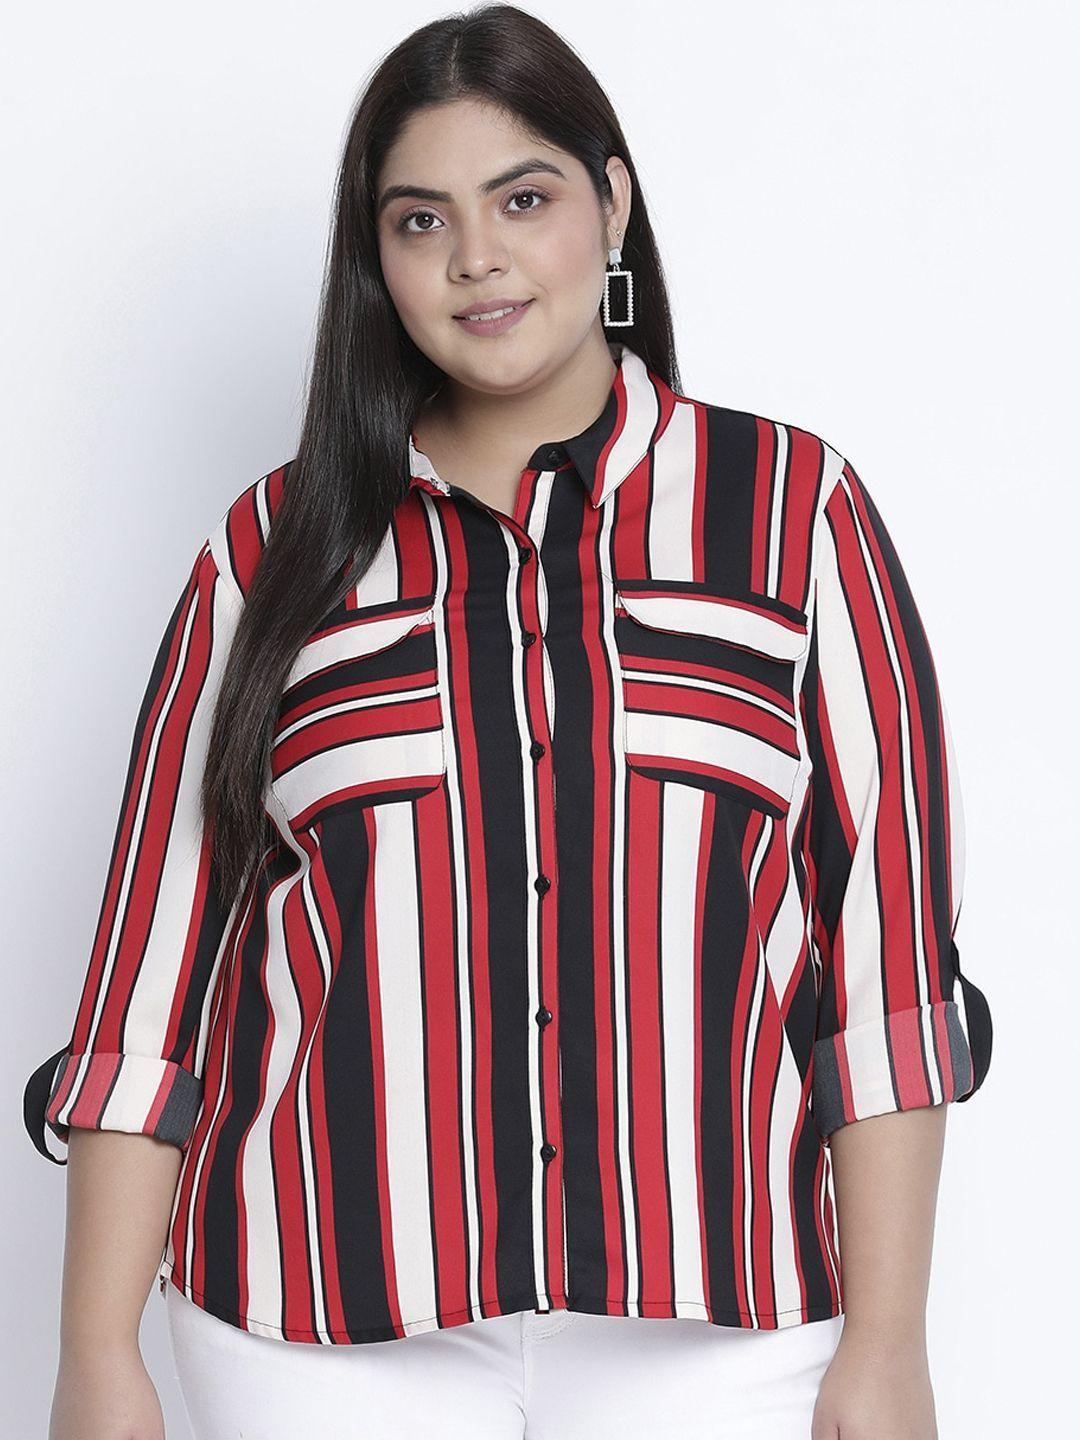 oxolloxo women plus size  red & white classic semi sheer striped casual shirt